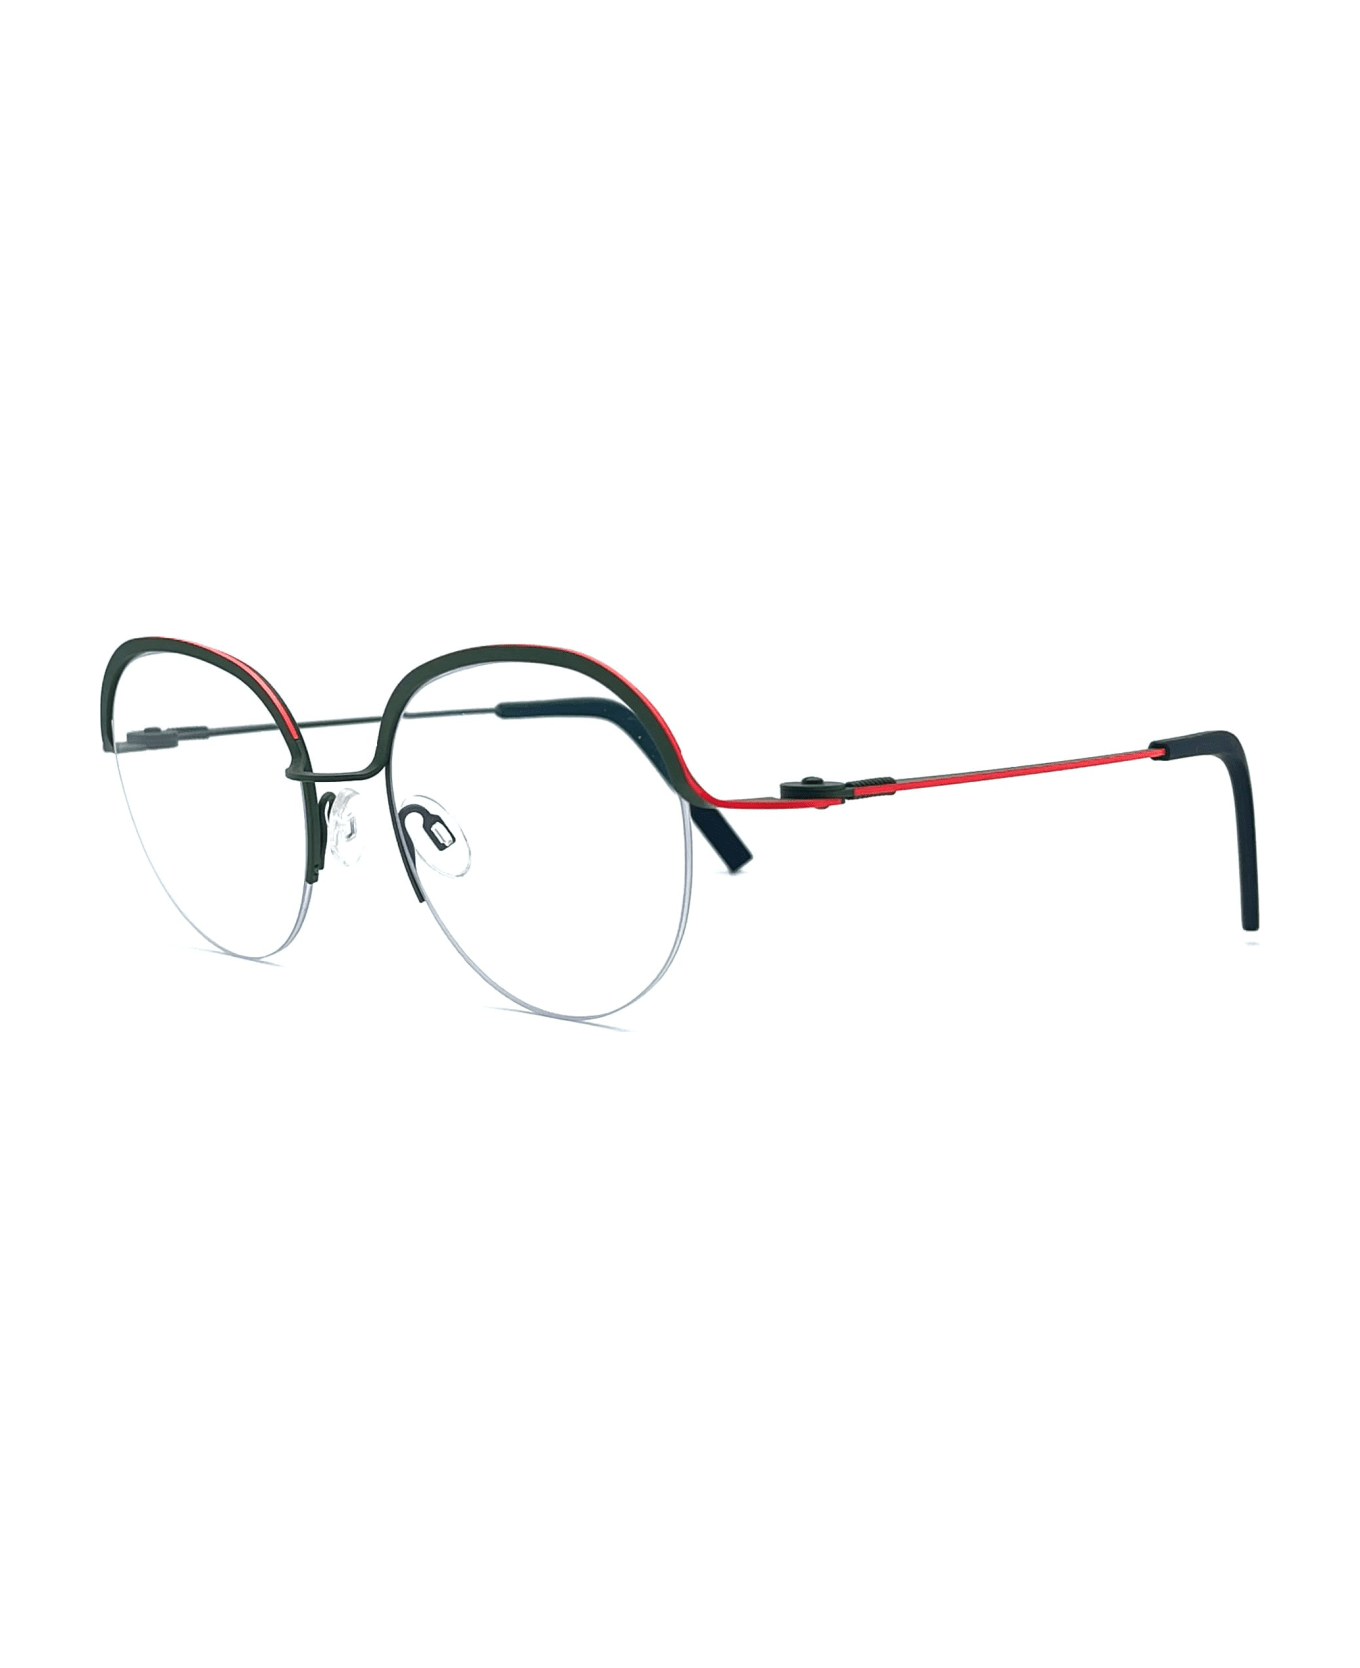 Theo Eyewear Marfona - 432 Glasses - green